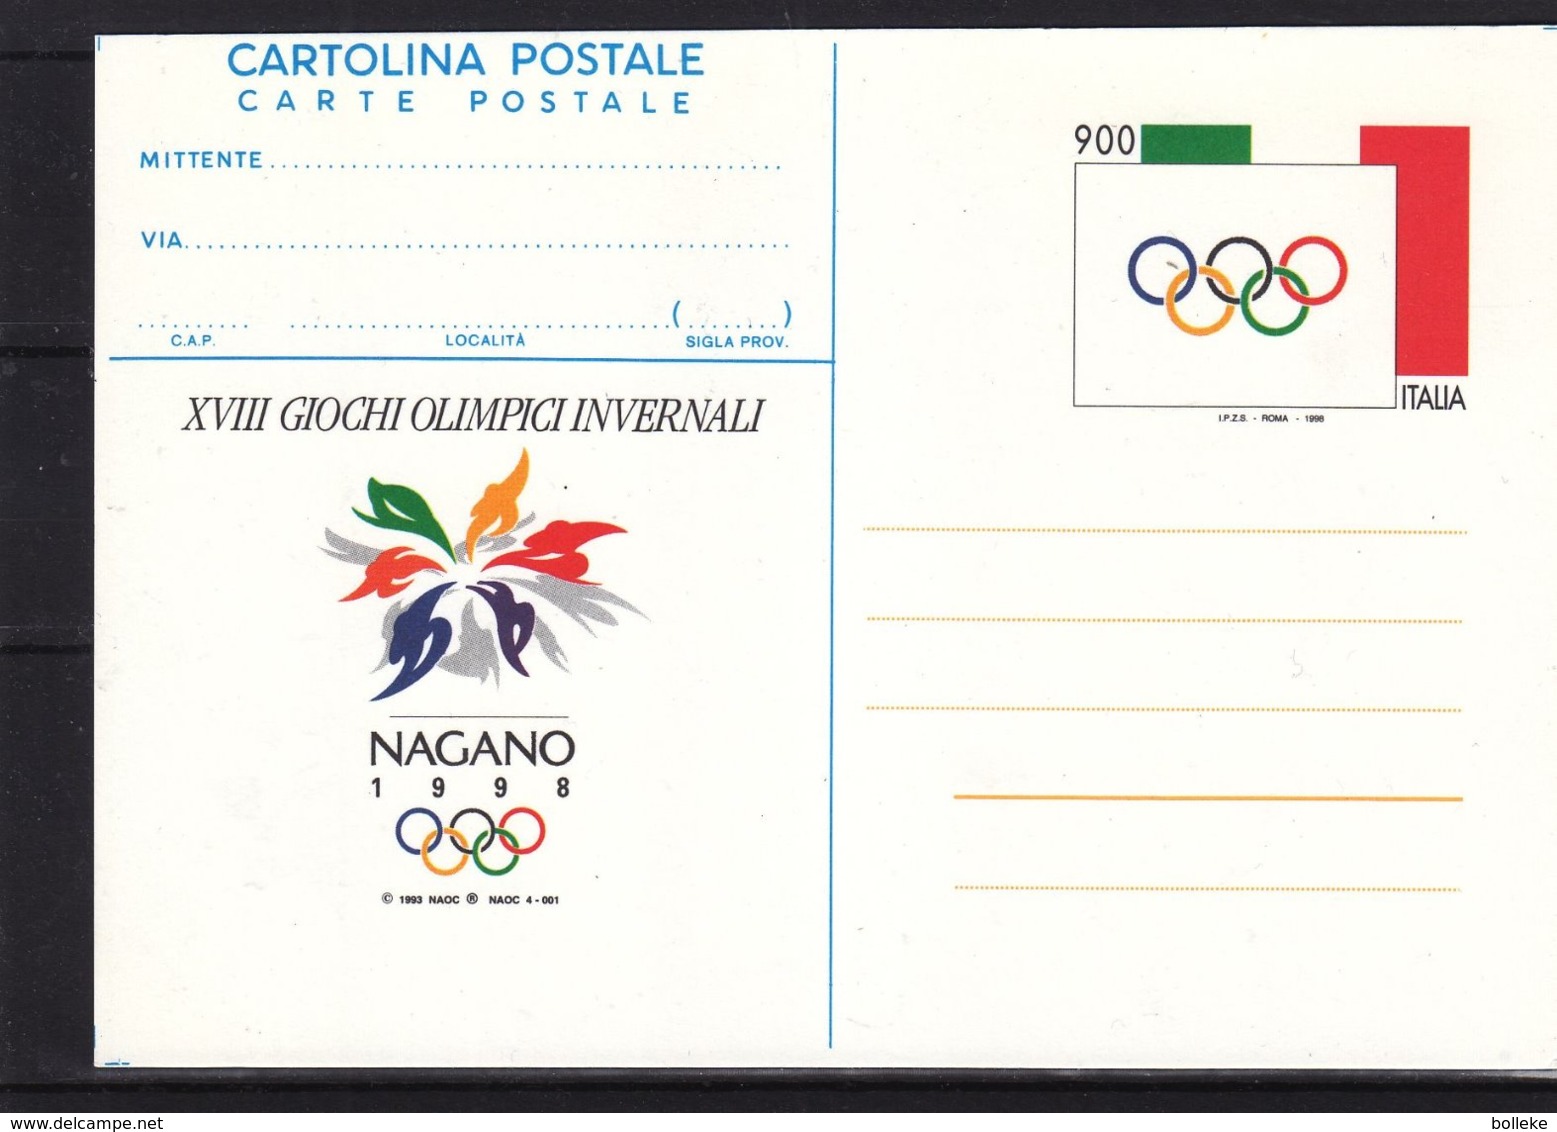 Jeux Olympiques Nagano - Italie - Carte Postale De 1998 - Anneaux Olympiques - Hiver 1998: Nagano